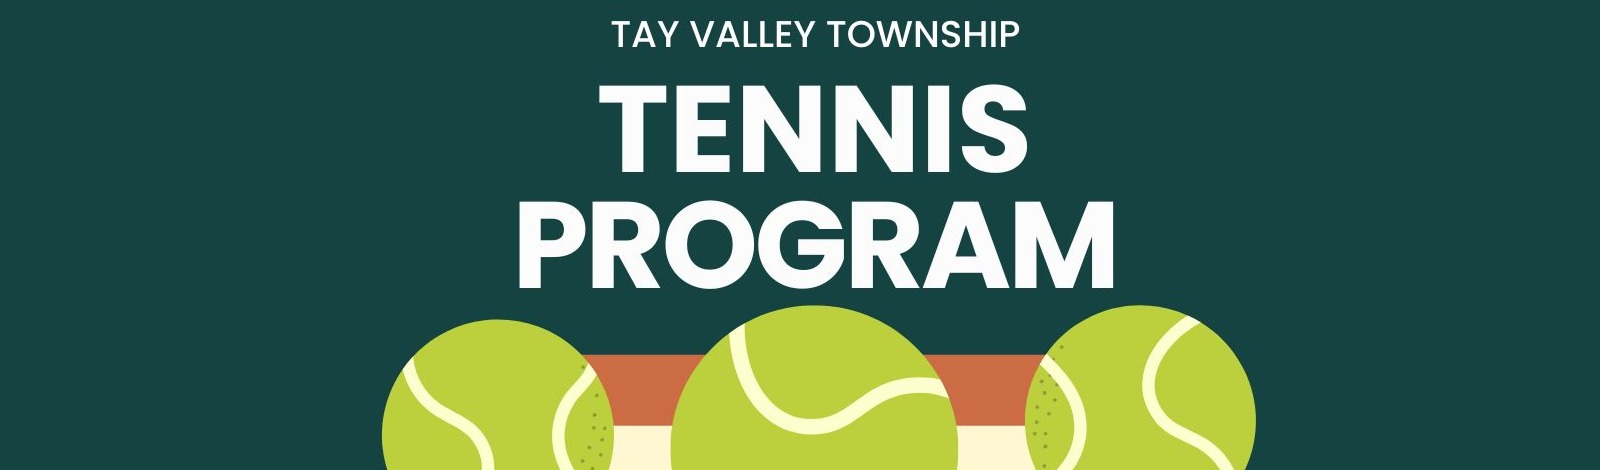 Tay Valley Tennis Program Poster 